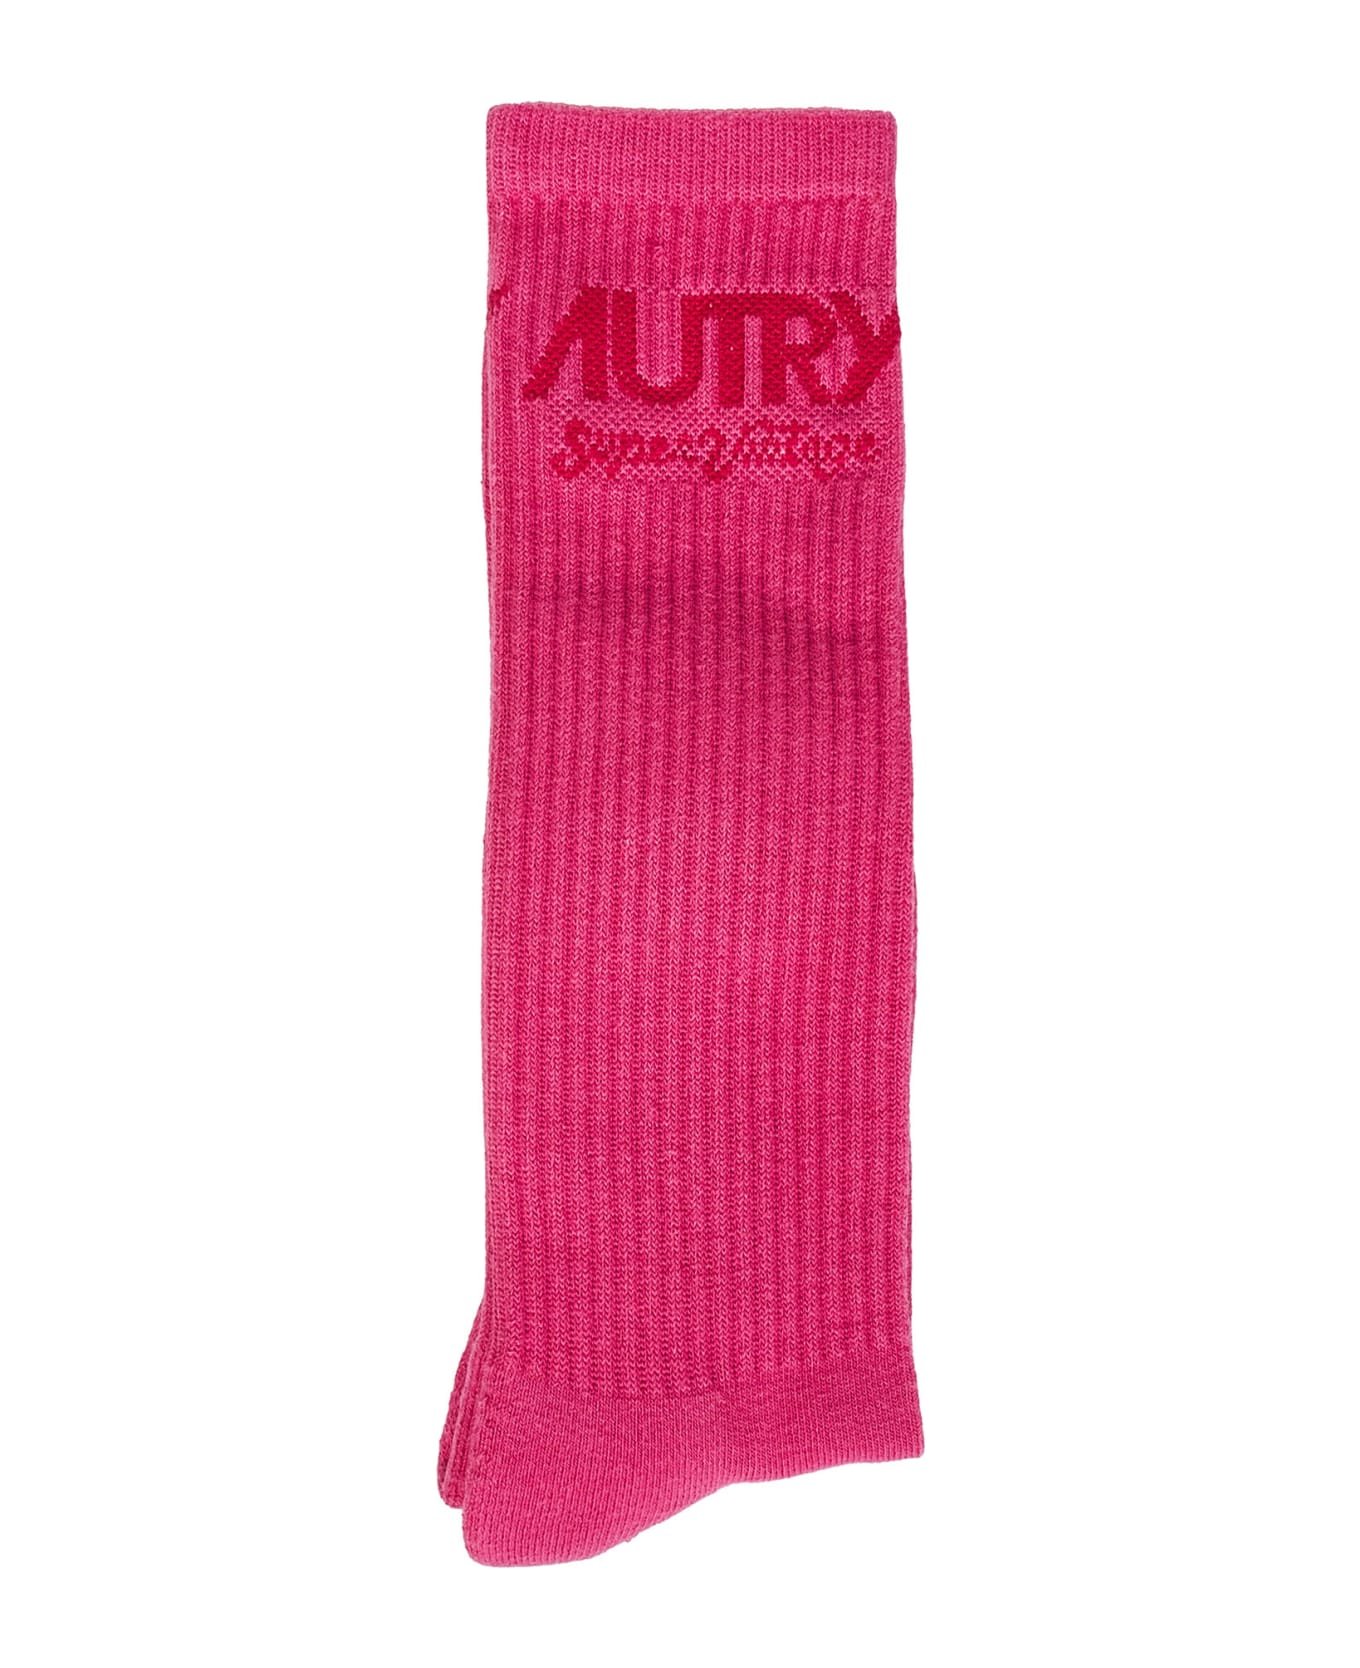 Autry Supervintage Socks - Tinto Pink